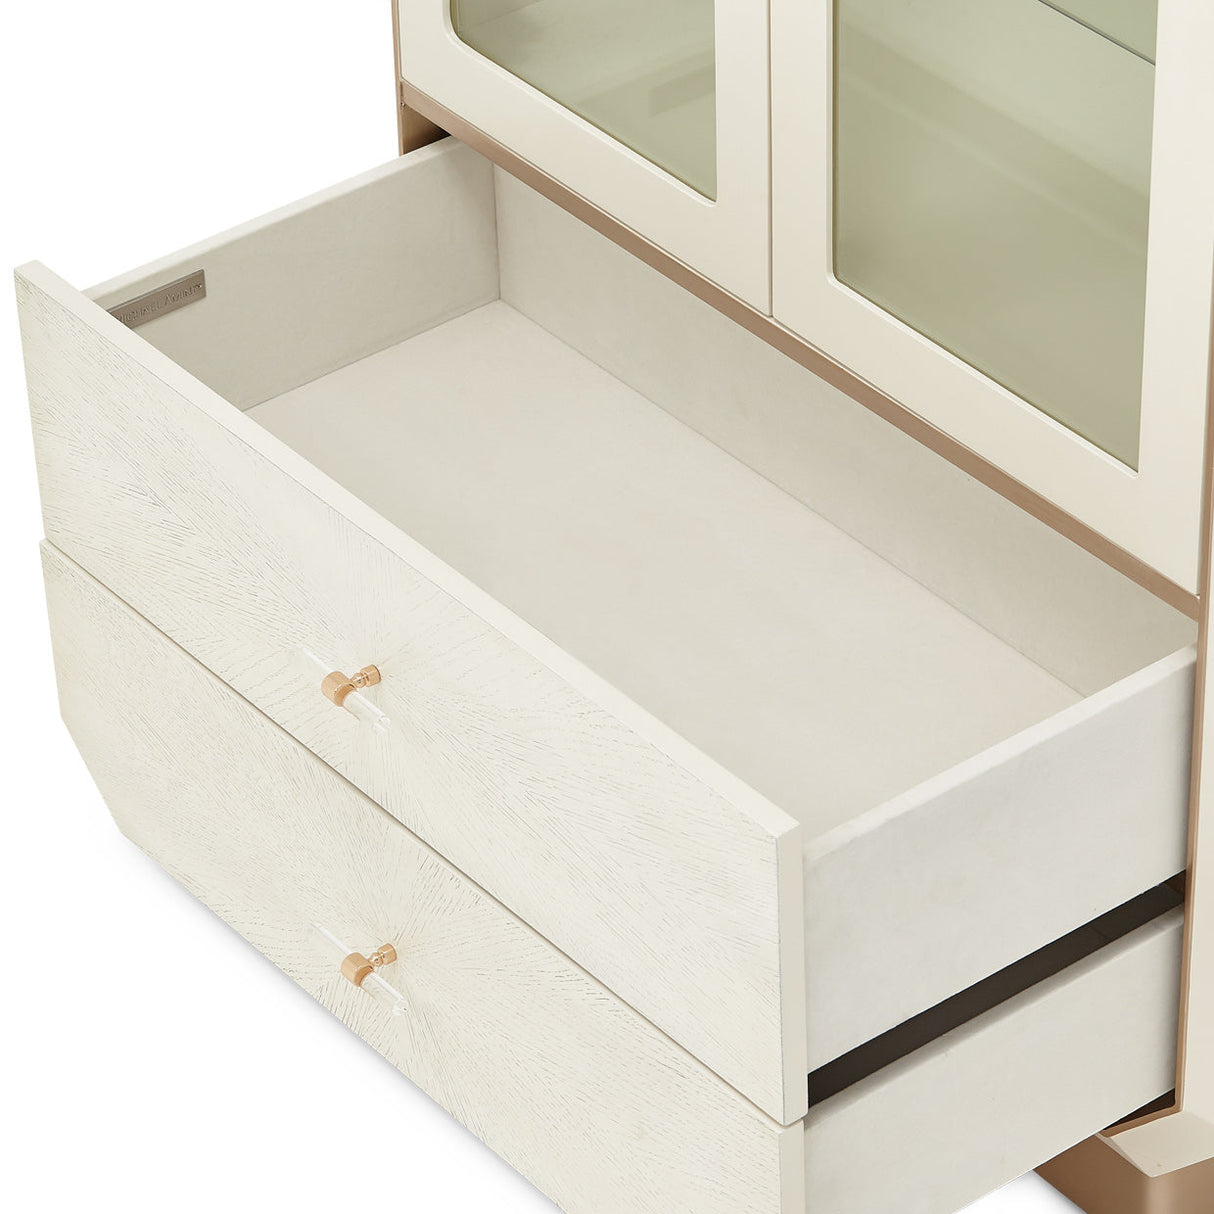 Aico Furniture - La Rachelle Display Cabinet In Medium Champagne - 9034209-136